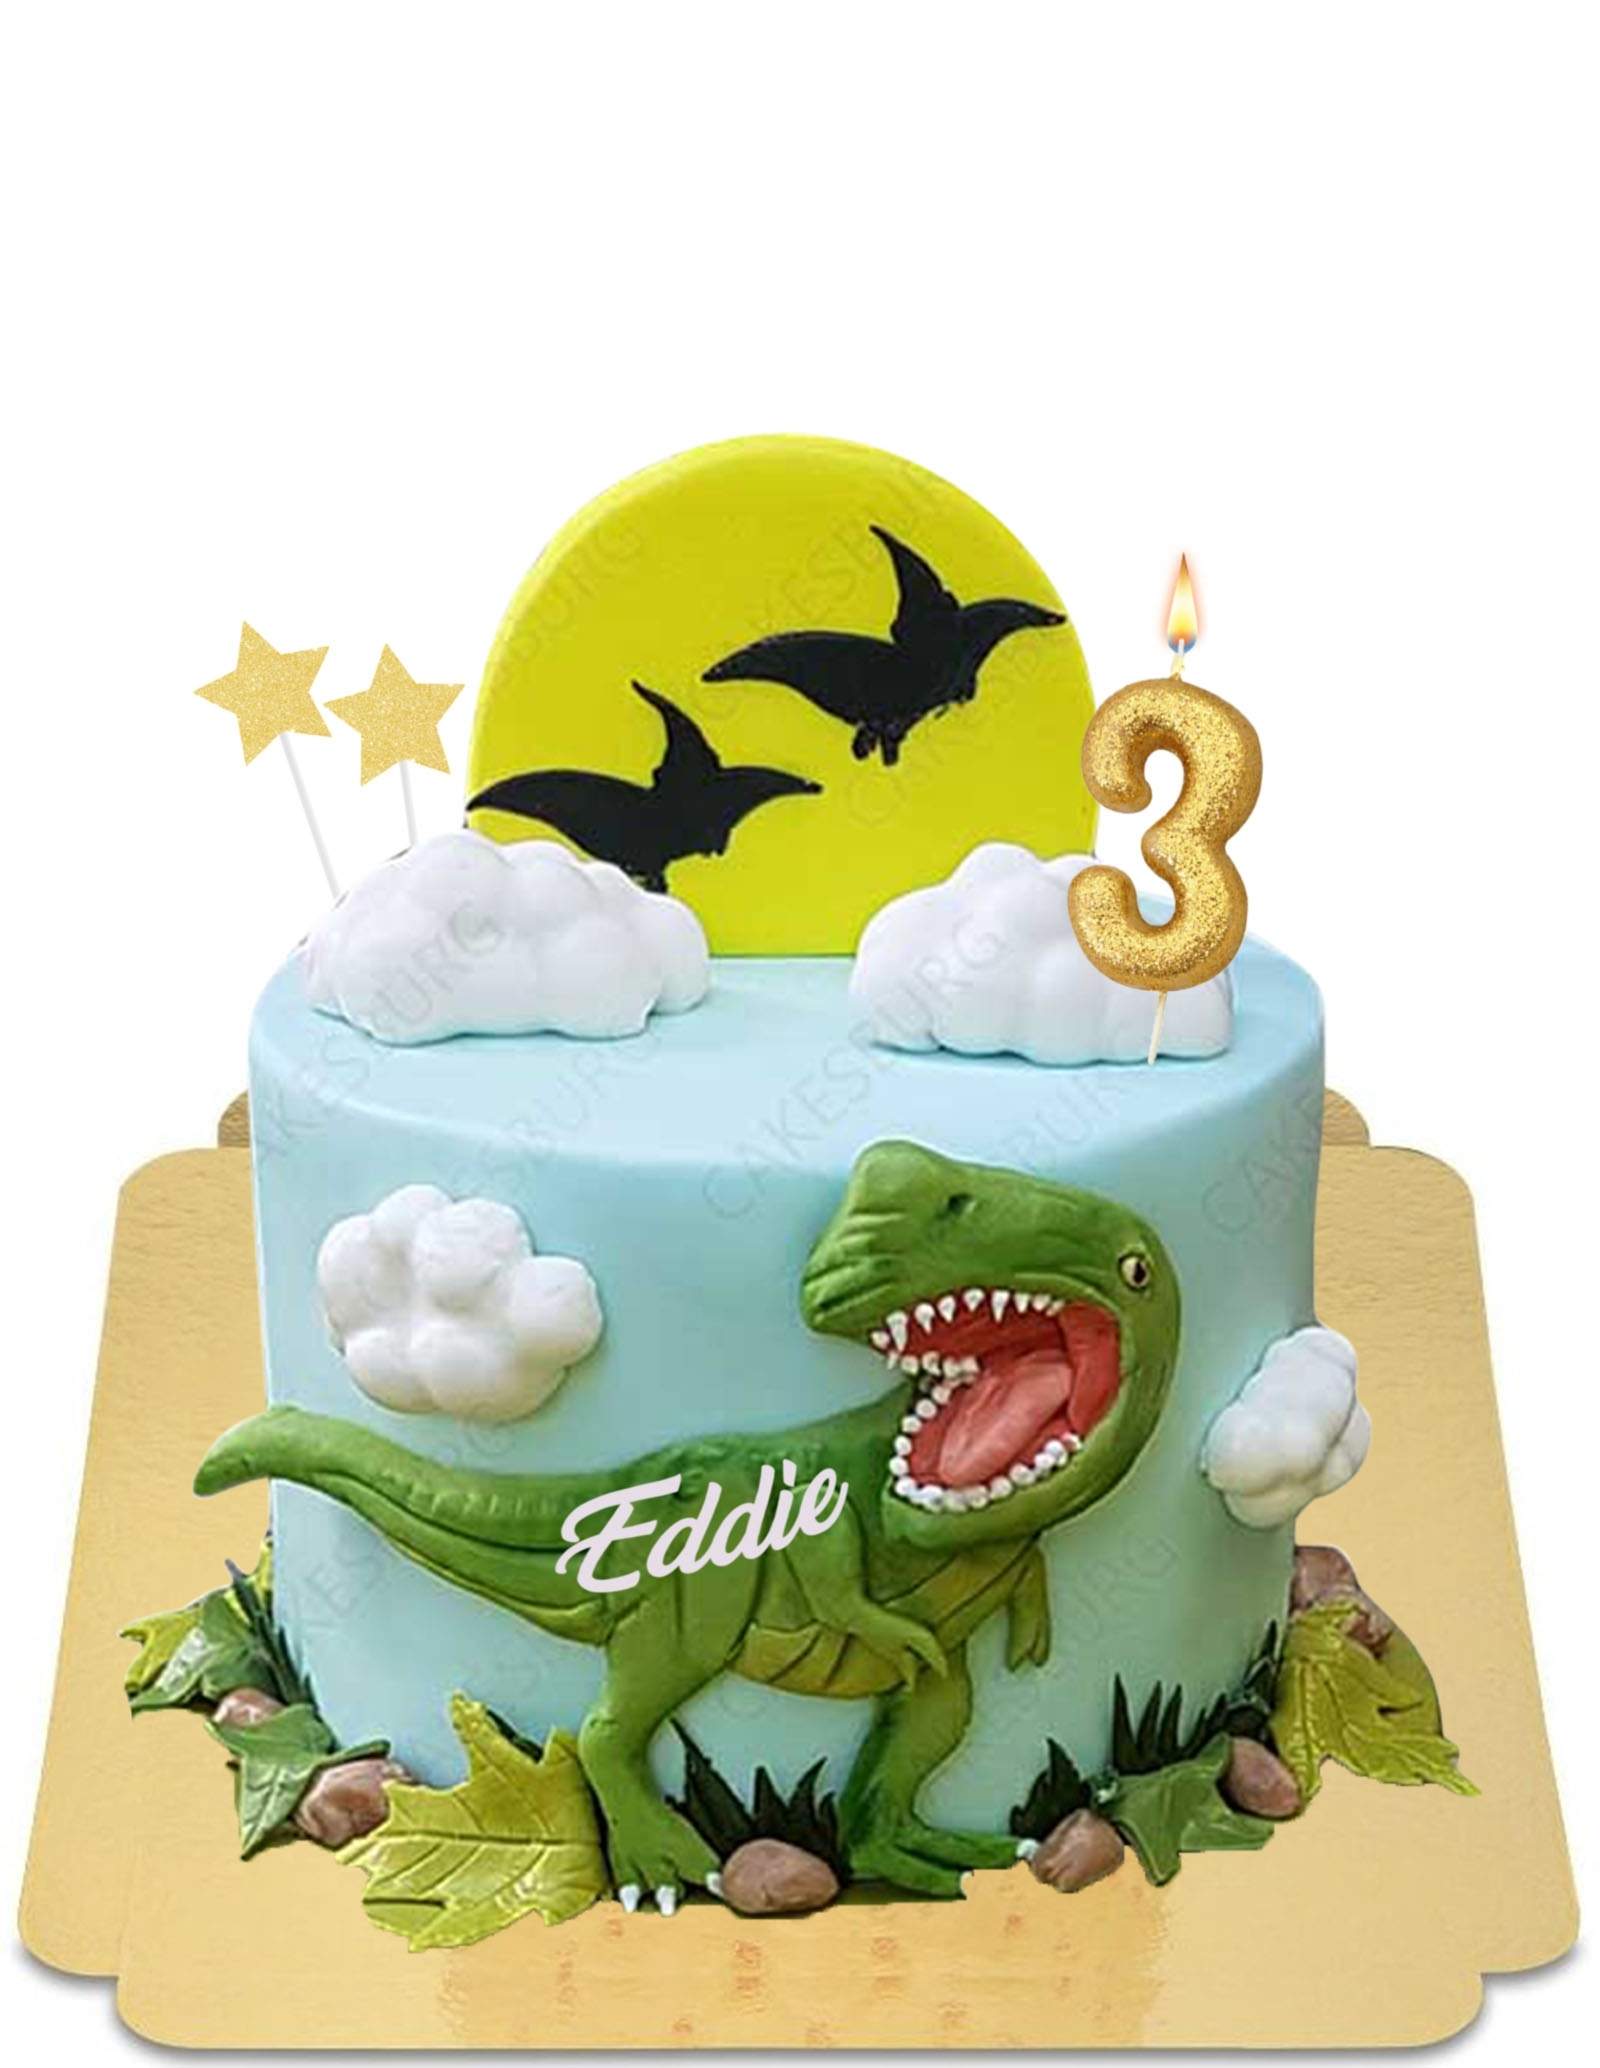 Bougie anniversaire Dinosaure